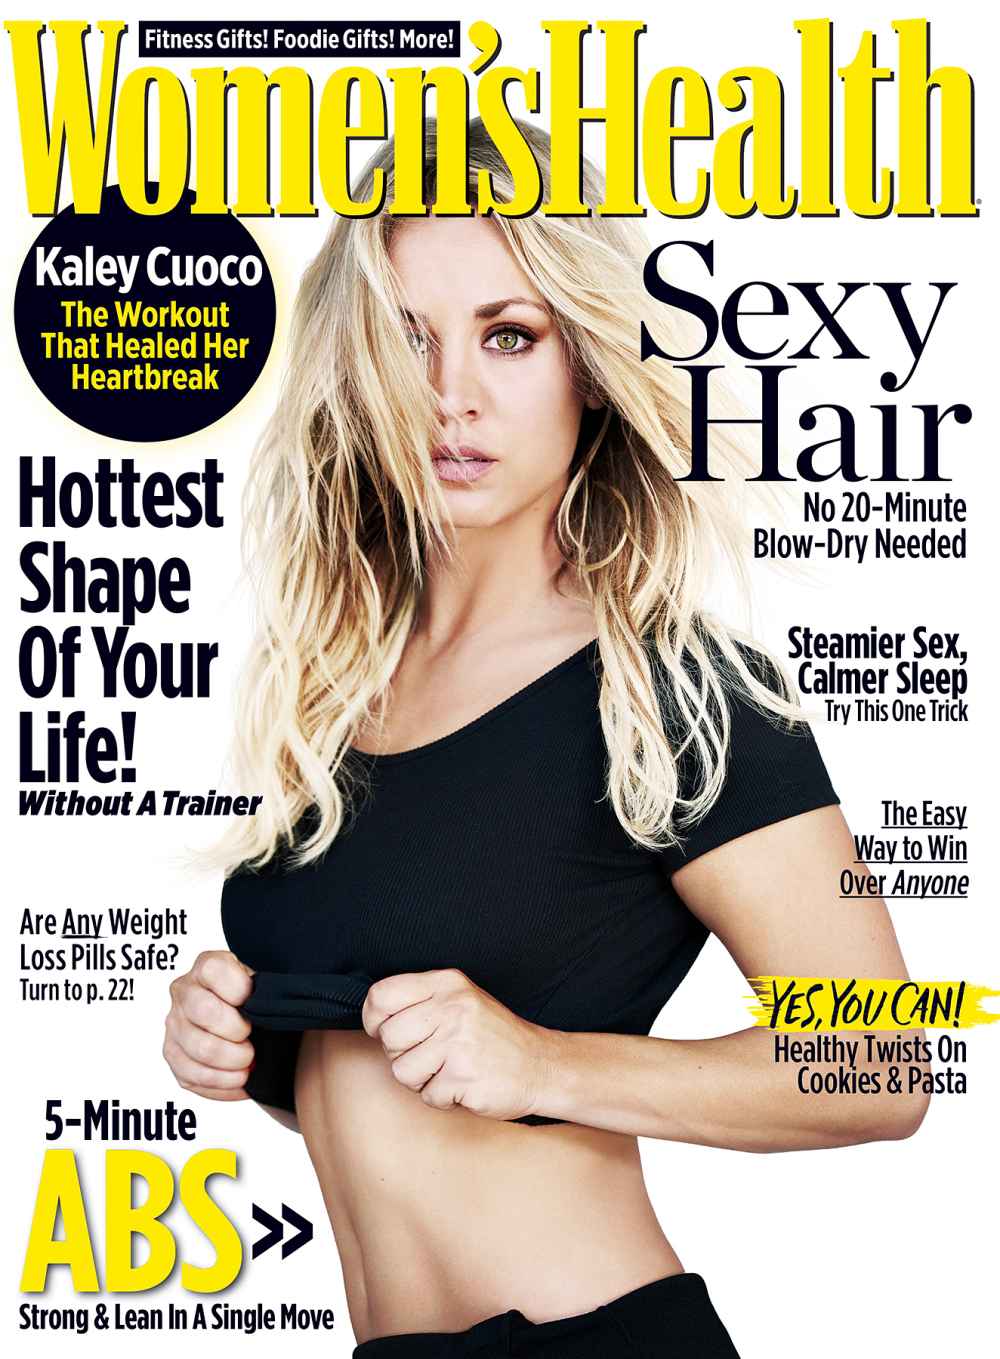 Kaley Cuoco Women's Health cover